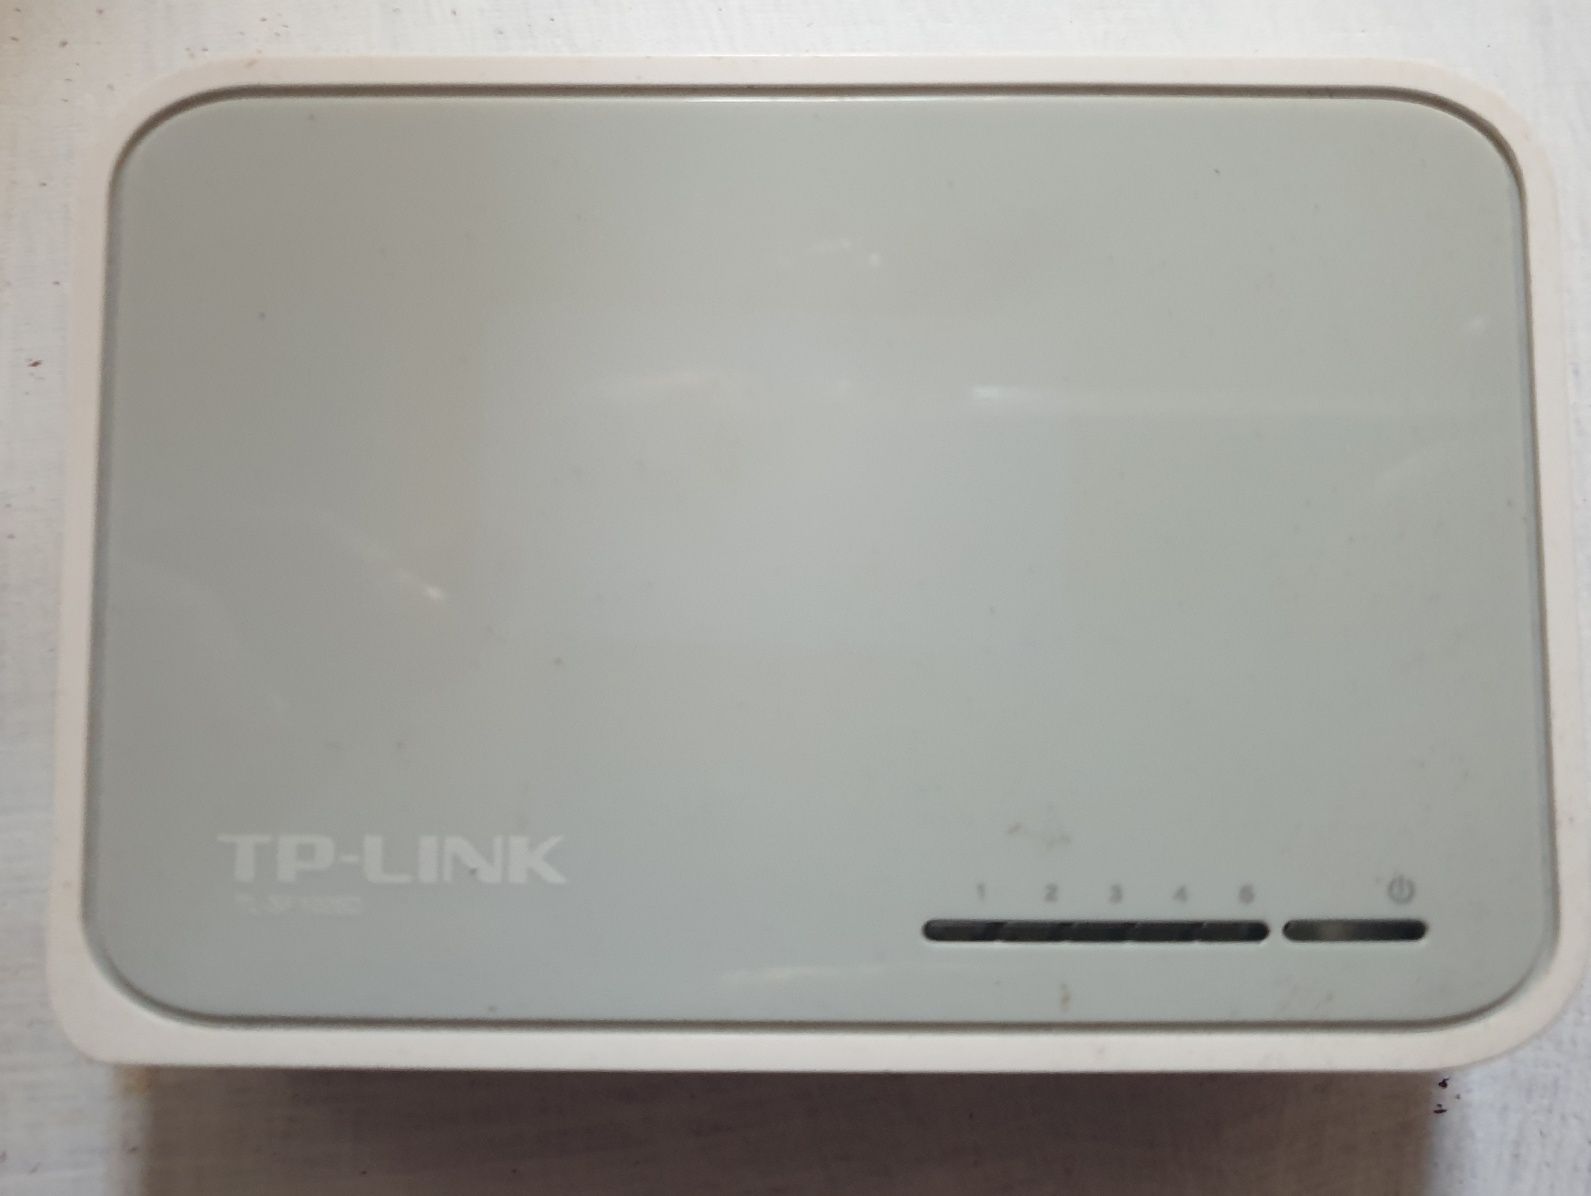 Switch TP-LINK TL-SF1005D (5 Portas Fast Ethernet - 100 Mbps)
8,99 €
+